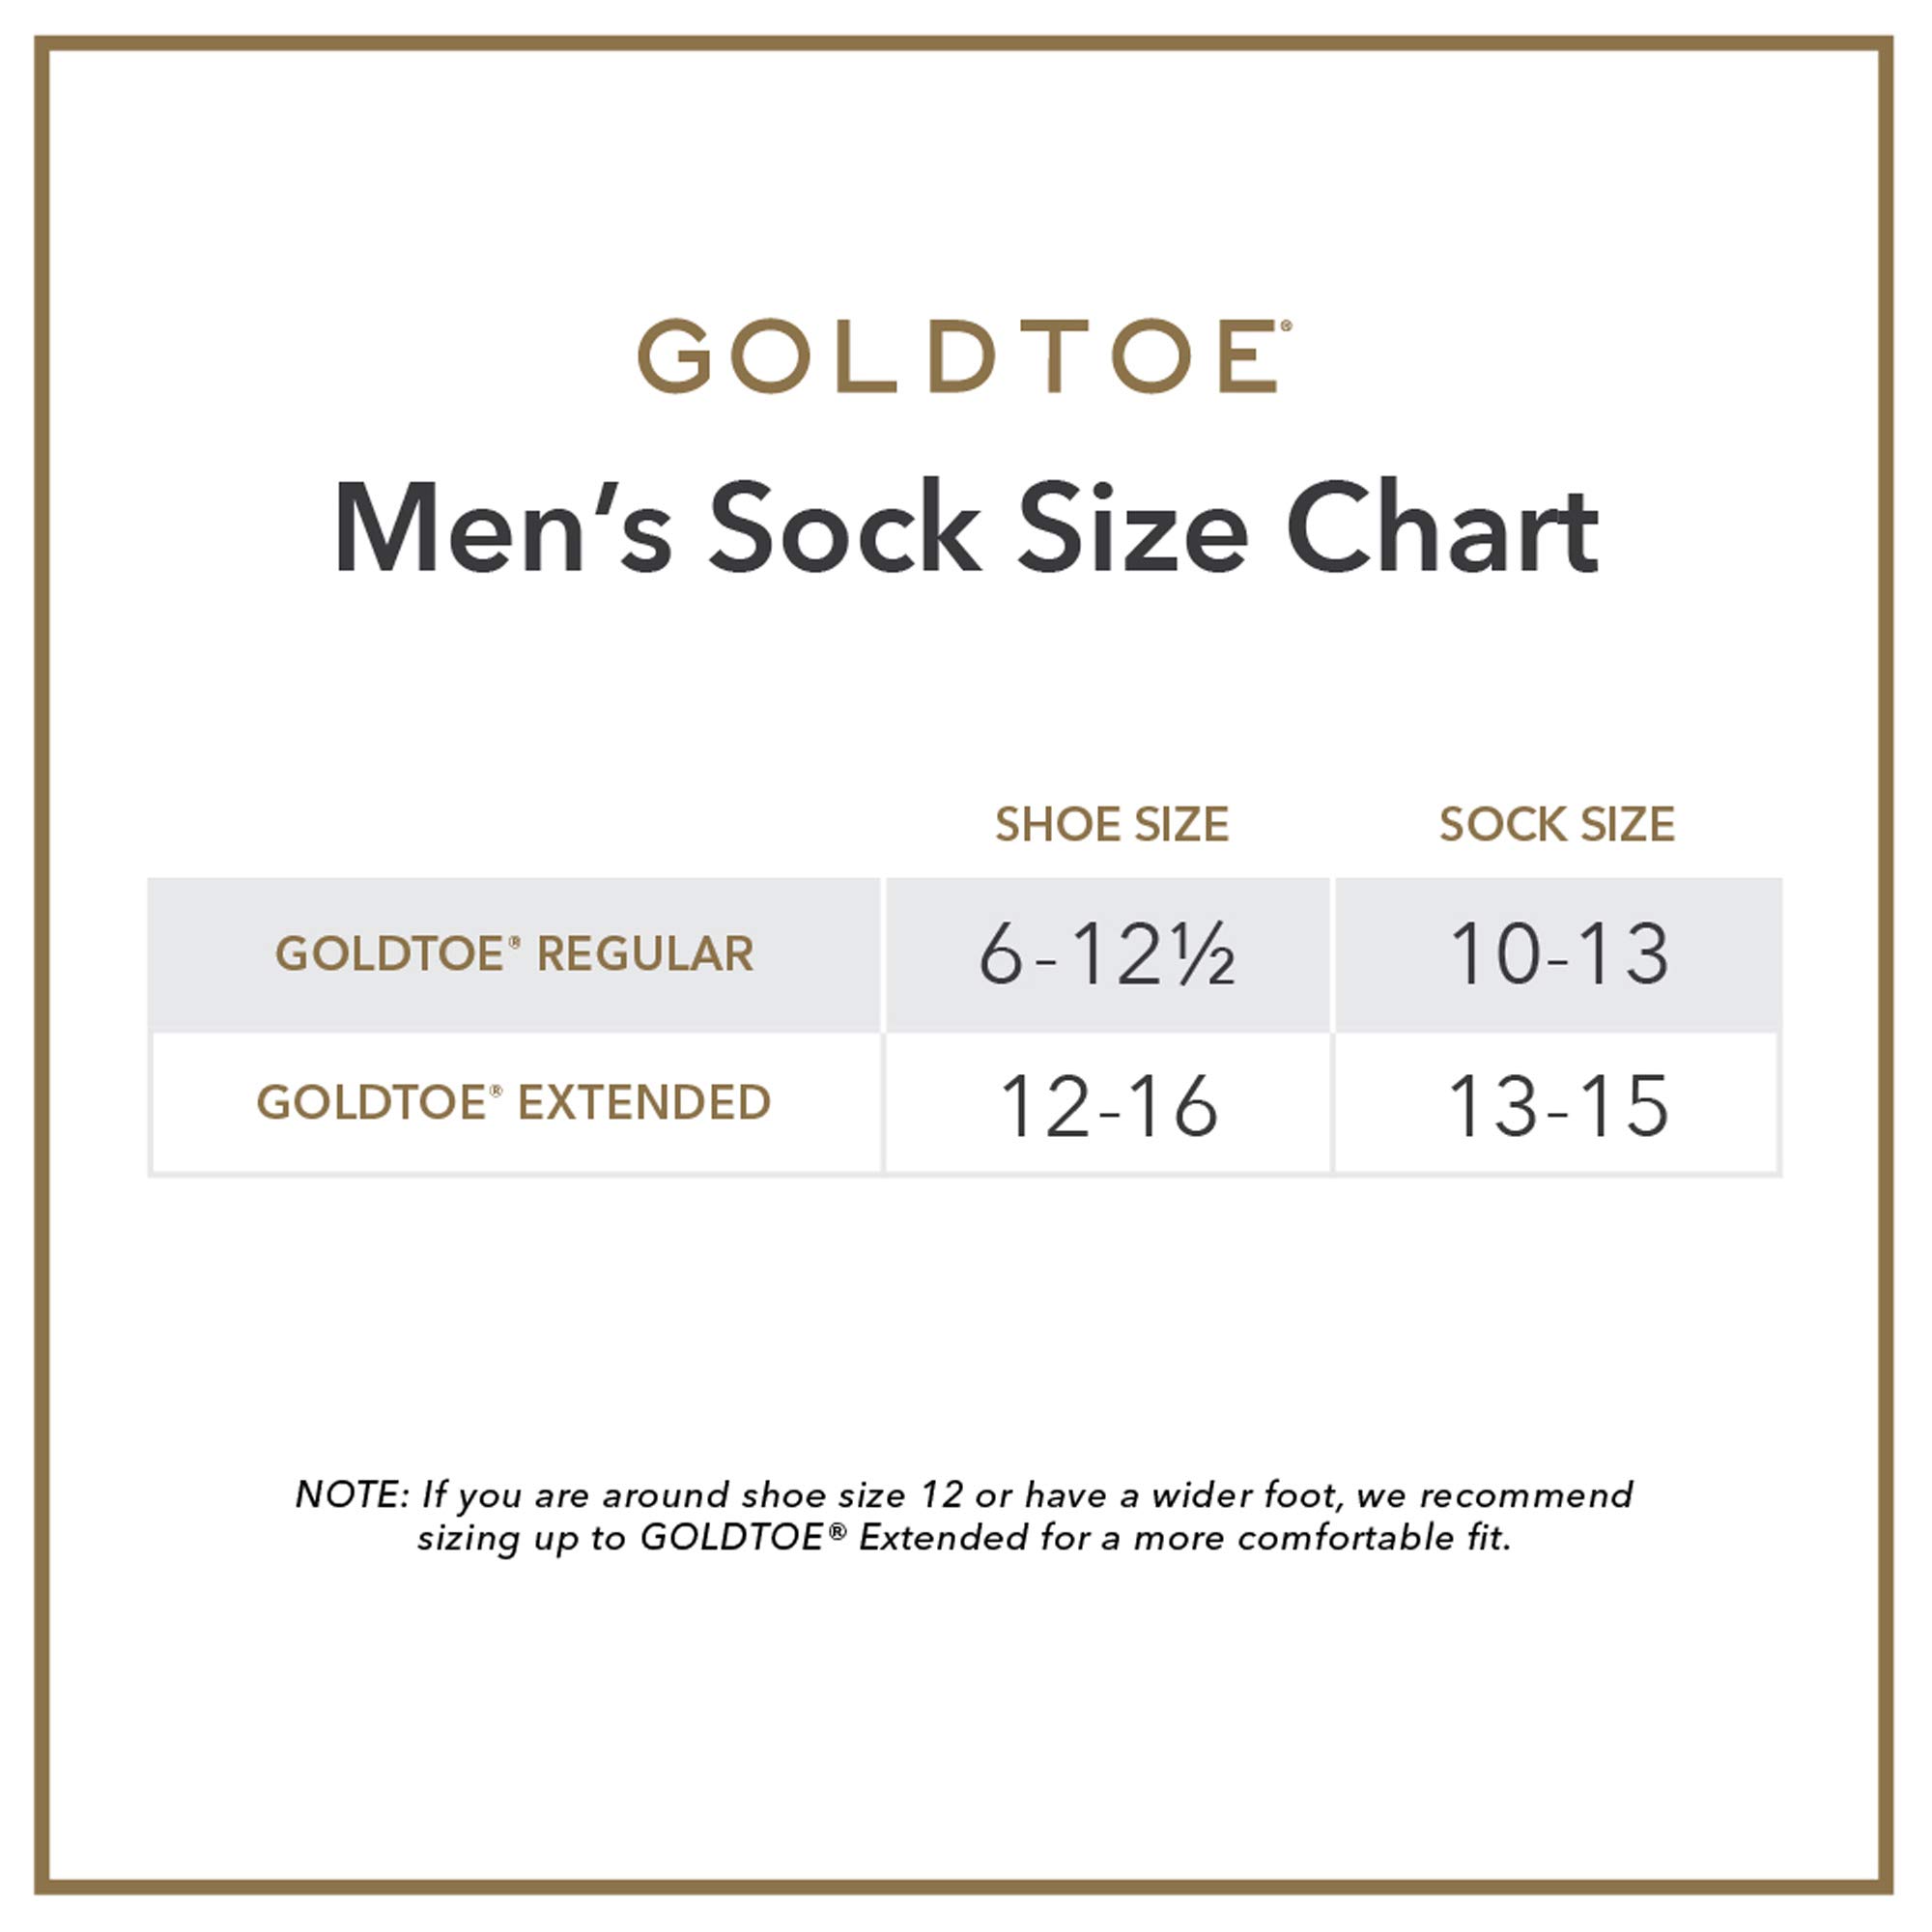 GOLDTOE Men's Carlyle Argyle Crew Dress Socks, 3-Pairs